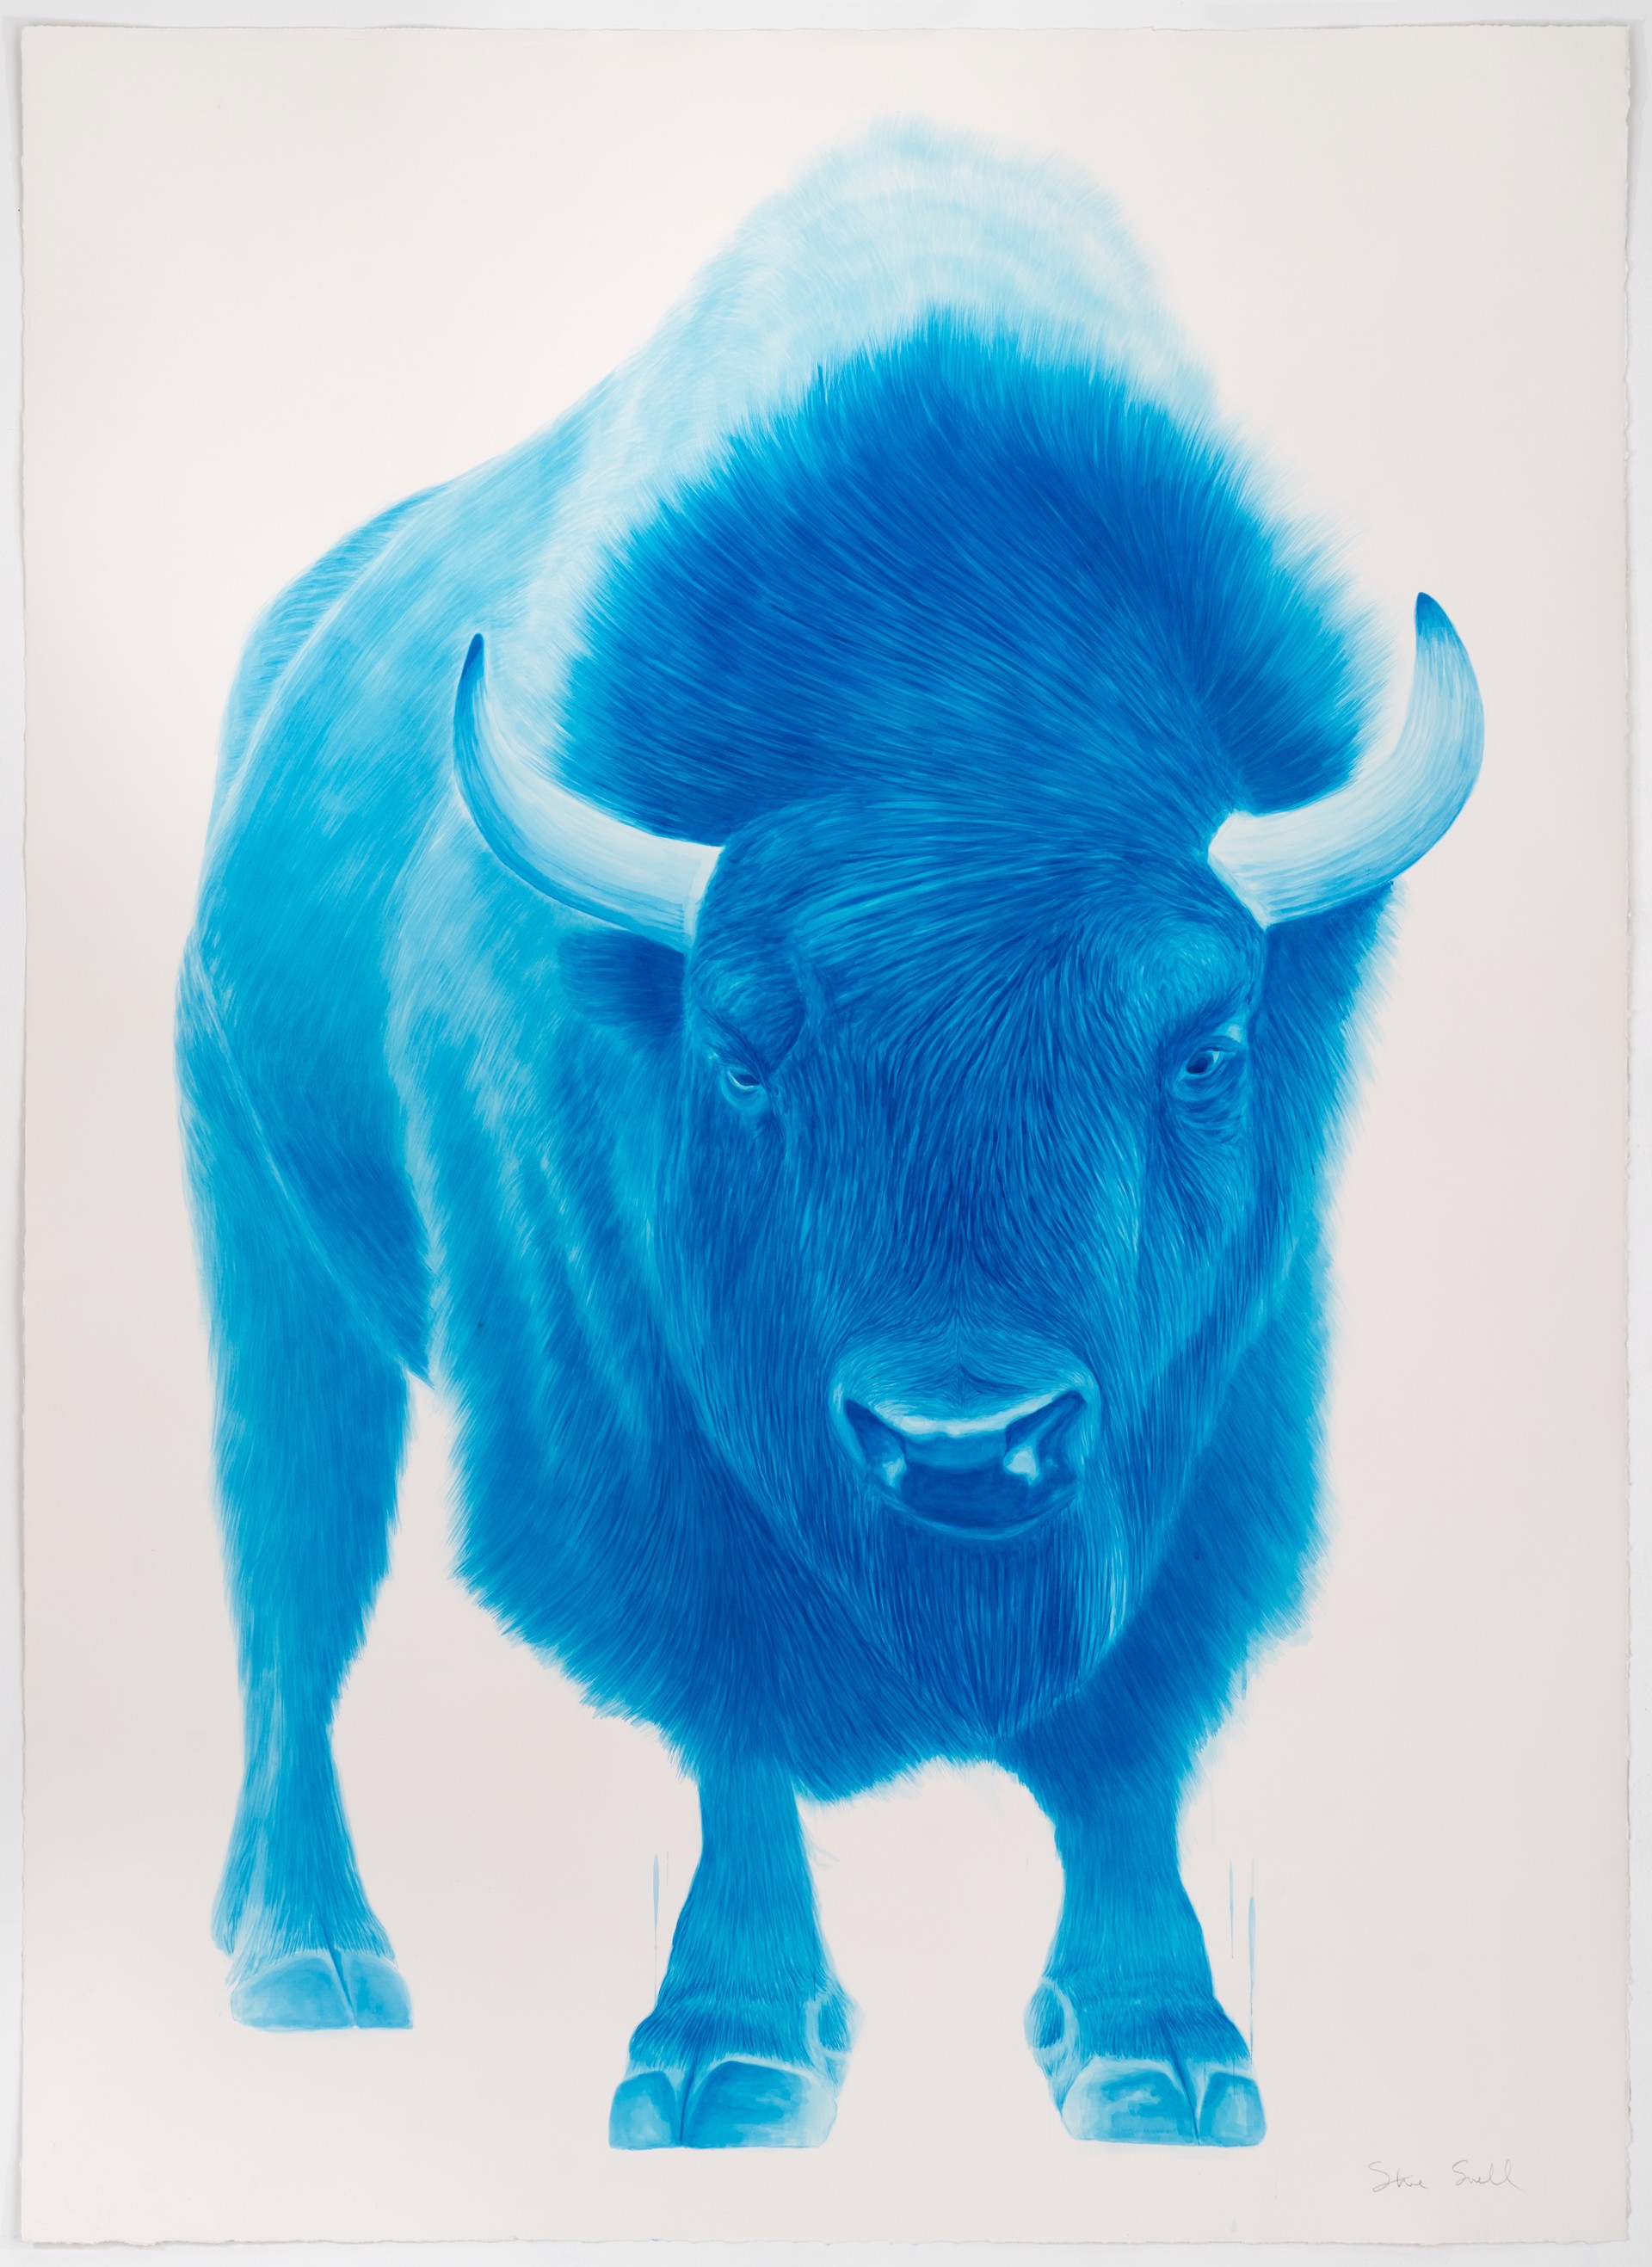 Blue Bison by Steve Snell